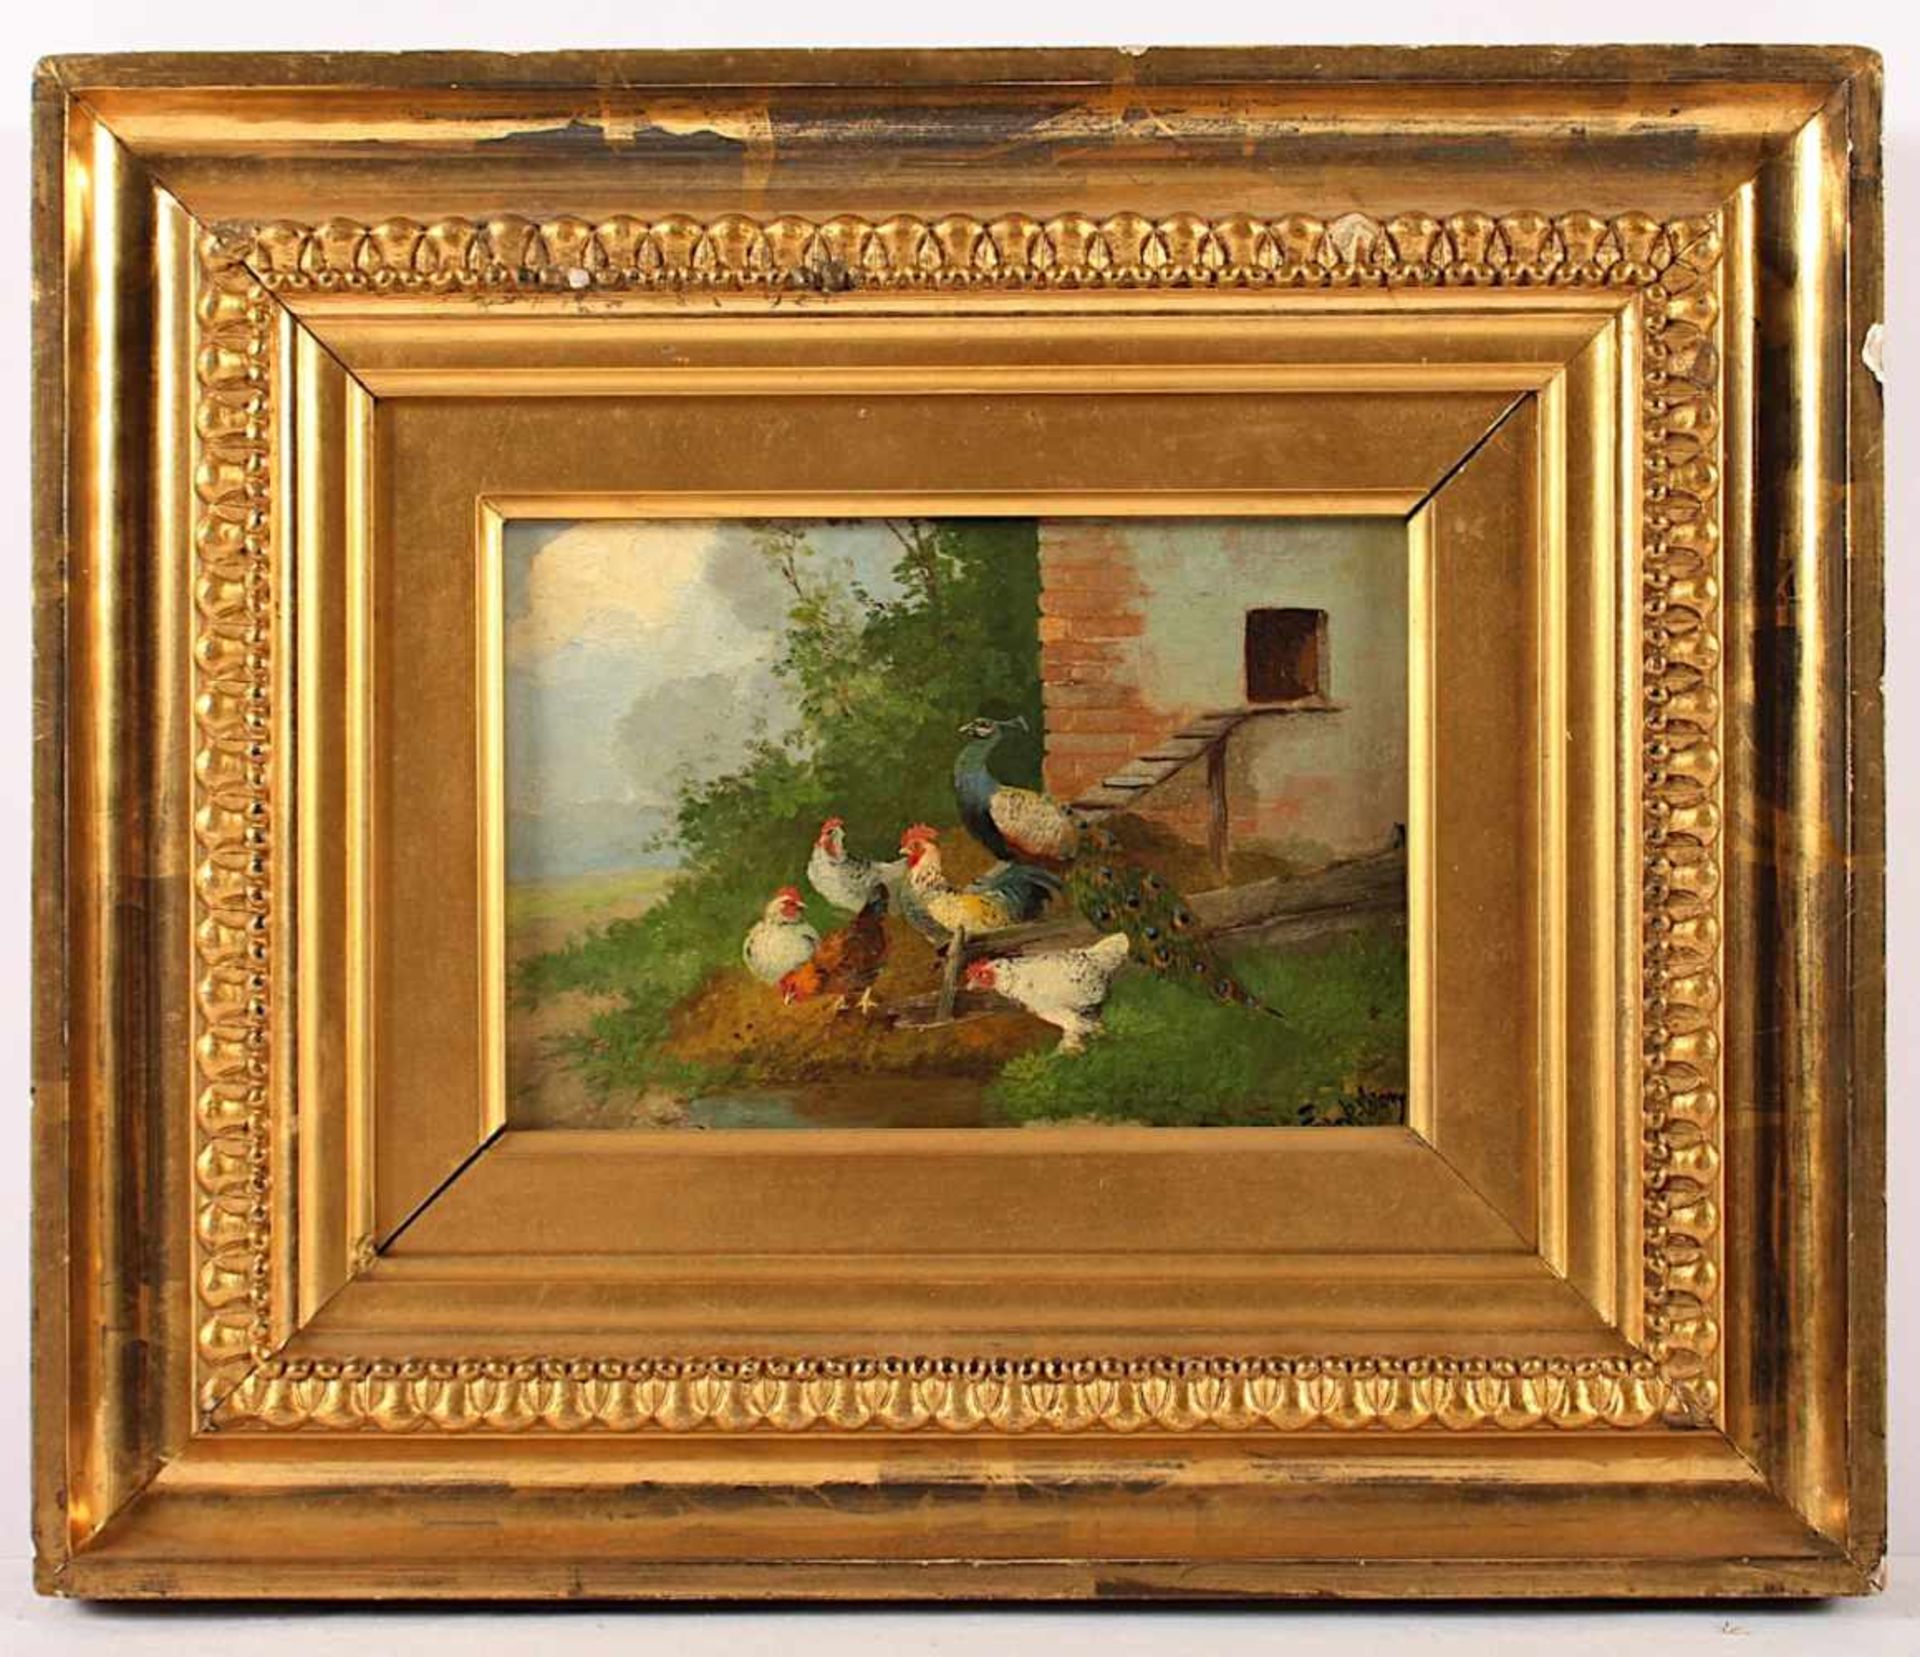 FRANK-COLON, Eugen (Maler um 1900), "Federvieh", Öl/Holz, 12 x 16, unten rechts signiert, R. - Image 2 of 3